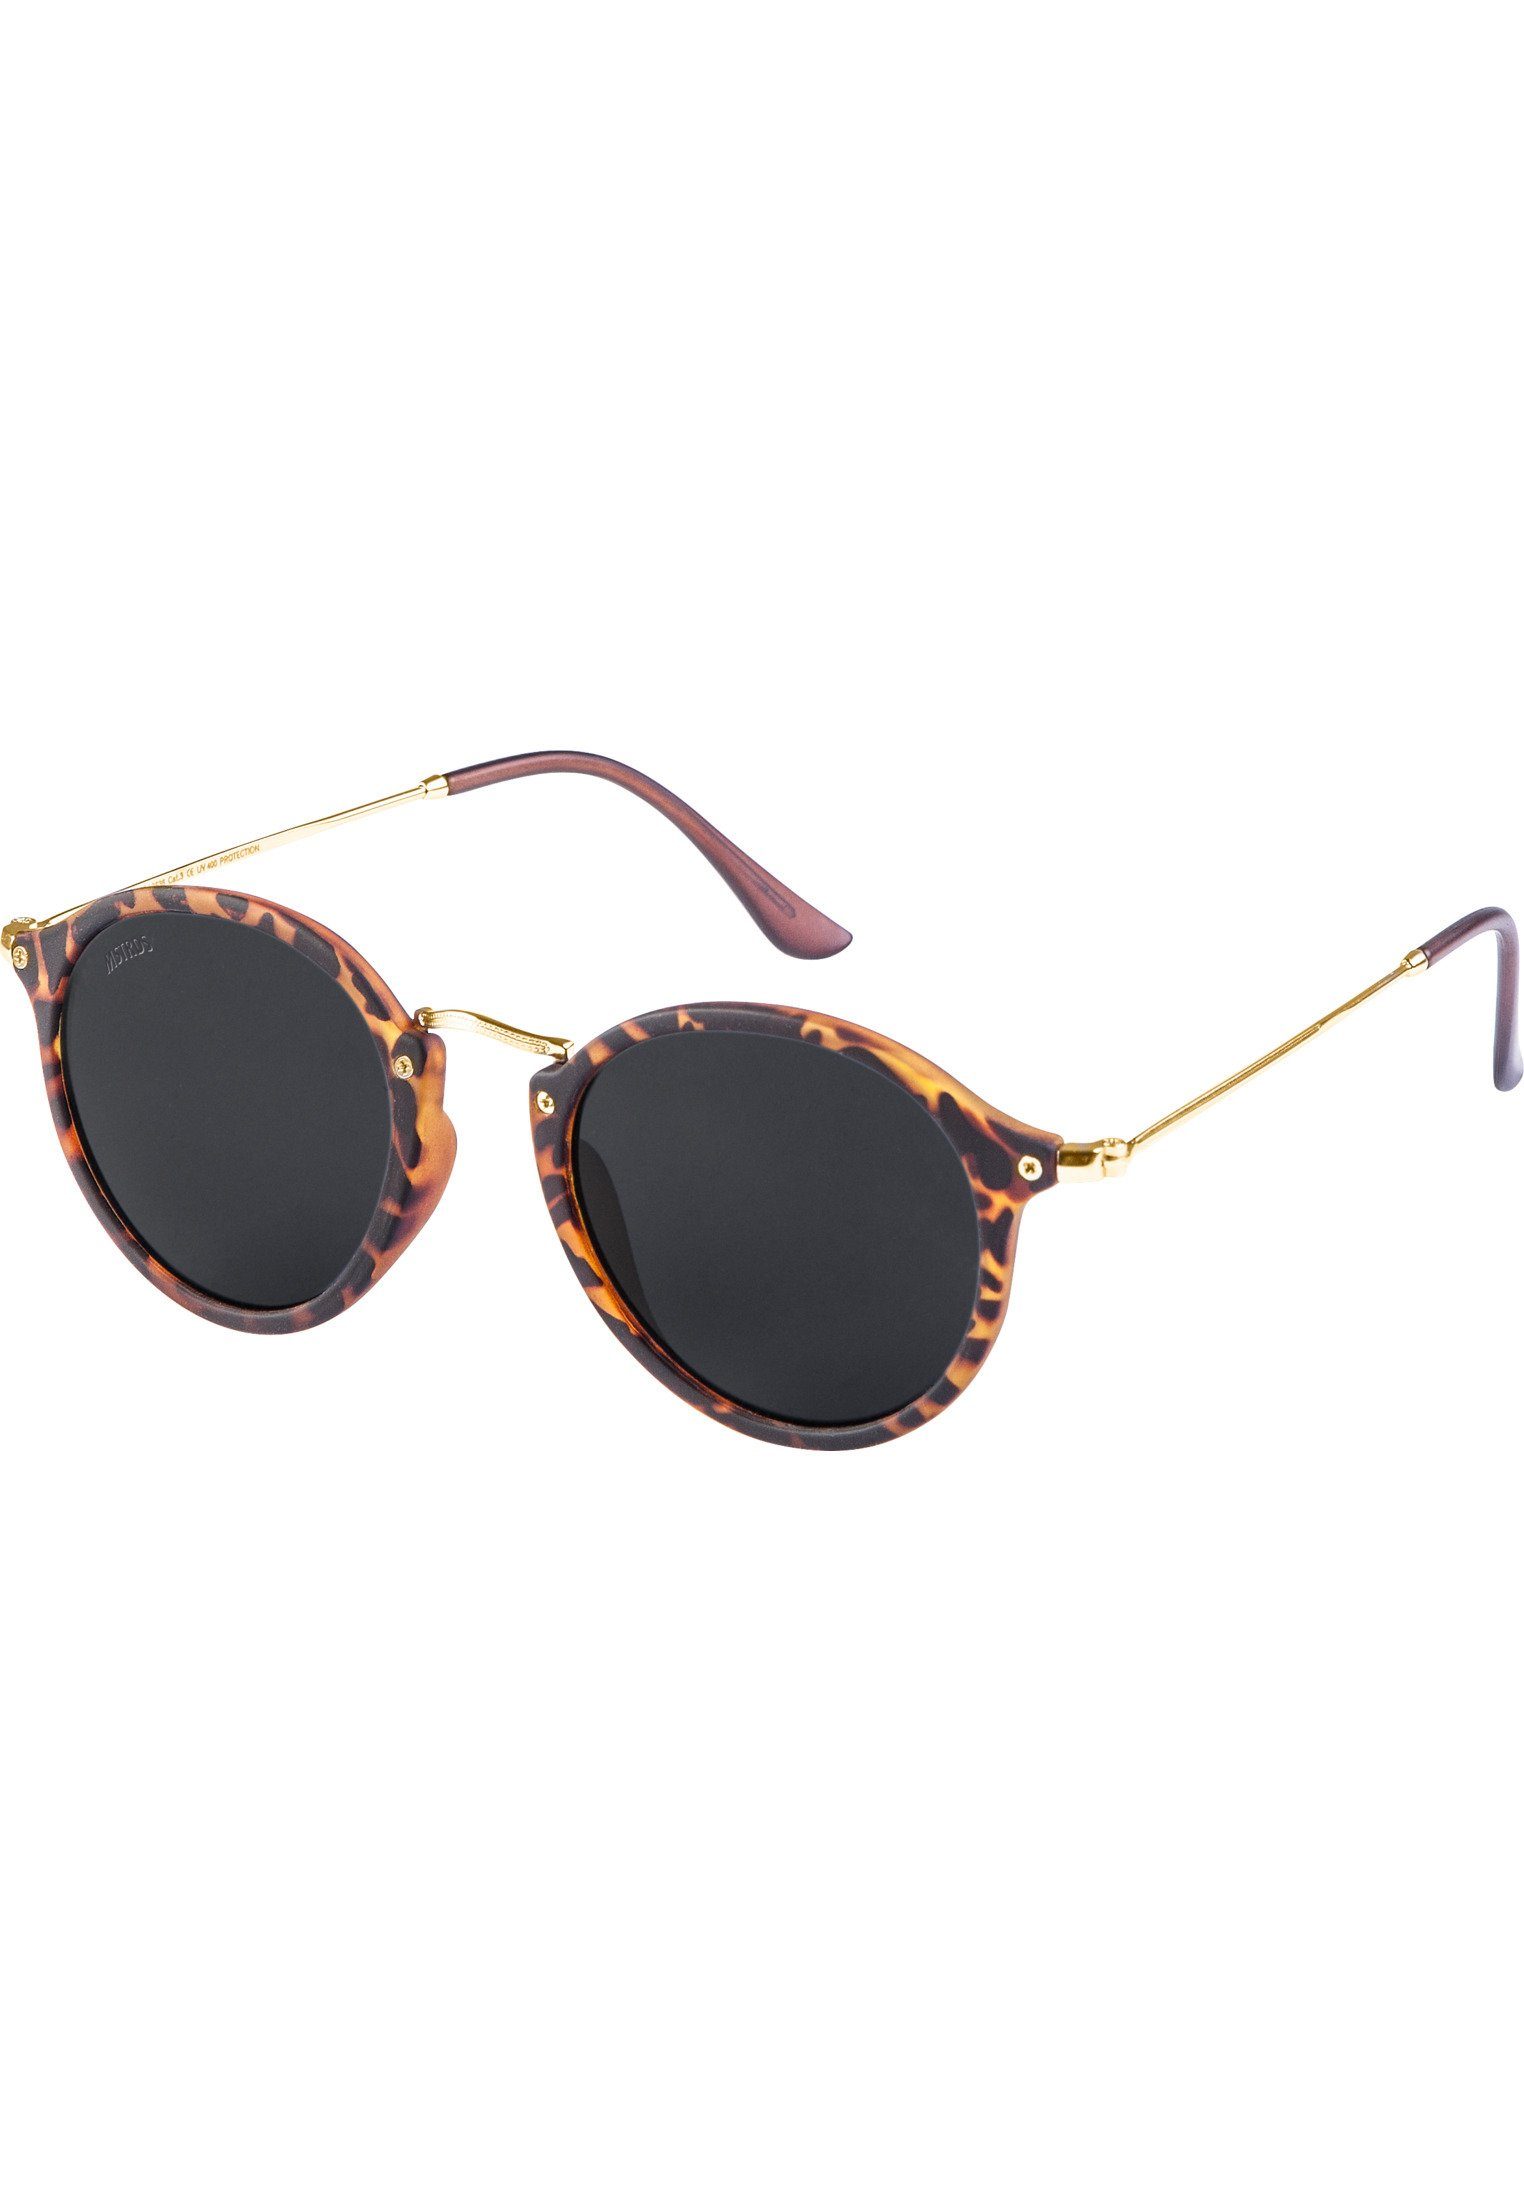 MSTRDS Sonnenbrille Accessoires Sunglasses Spy havanna/grey